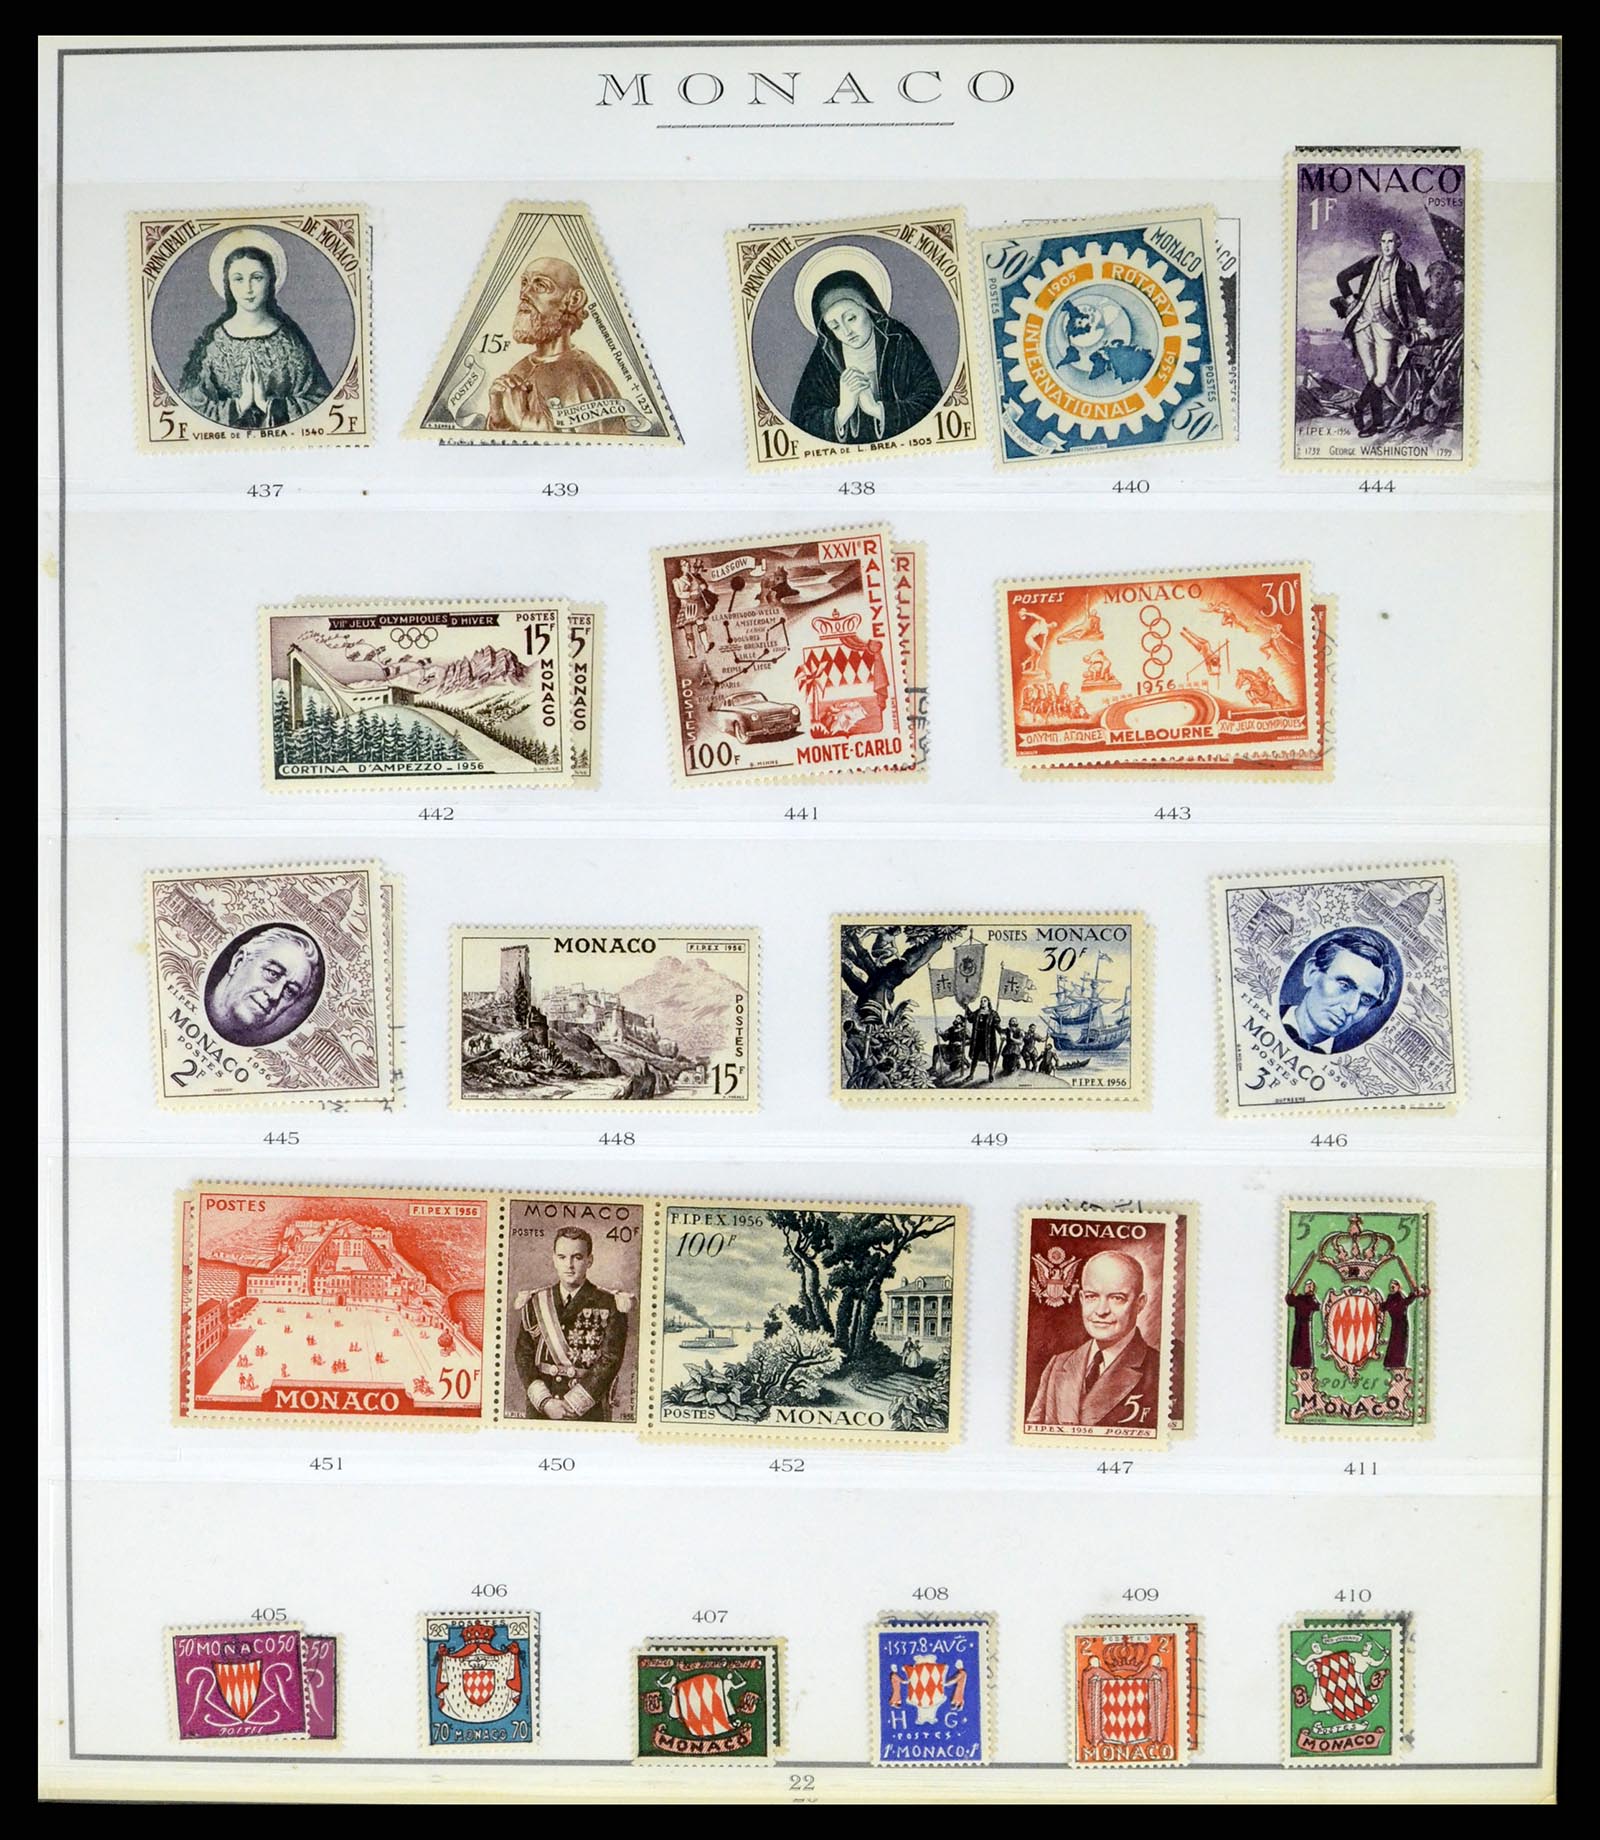 37437 041 - Stamp collection 37437 Monaco 1885-1996.